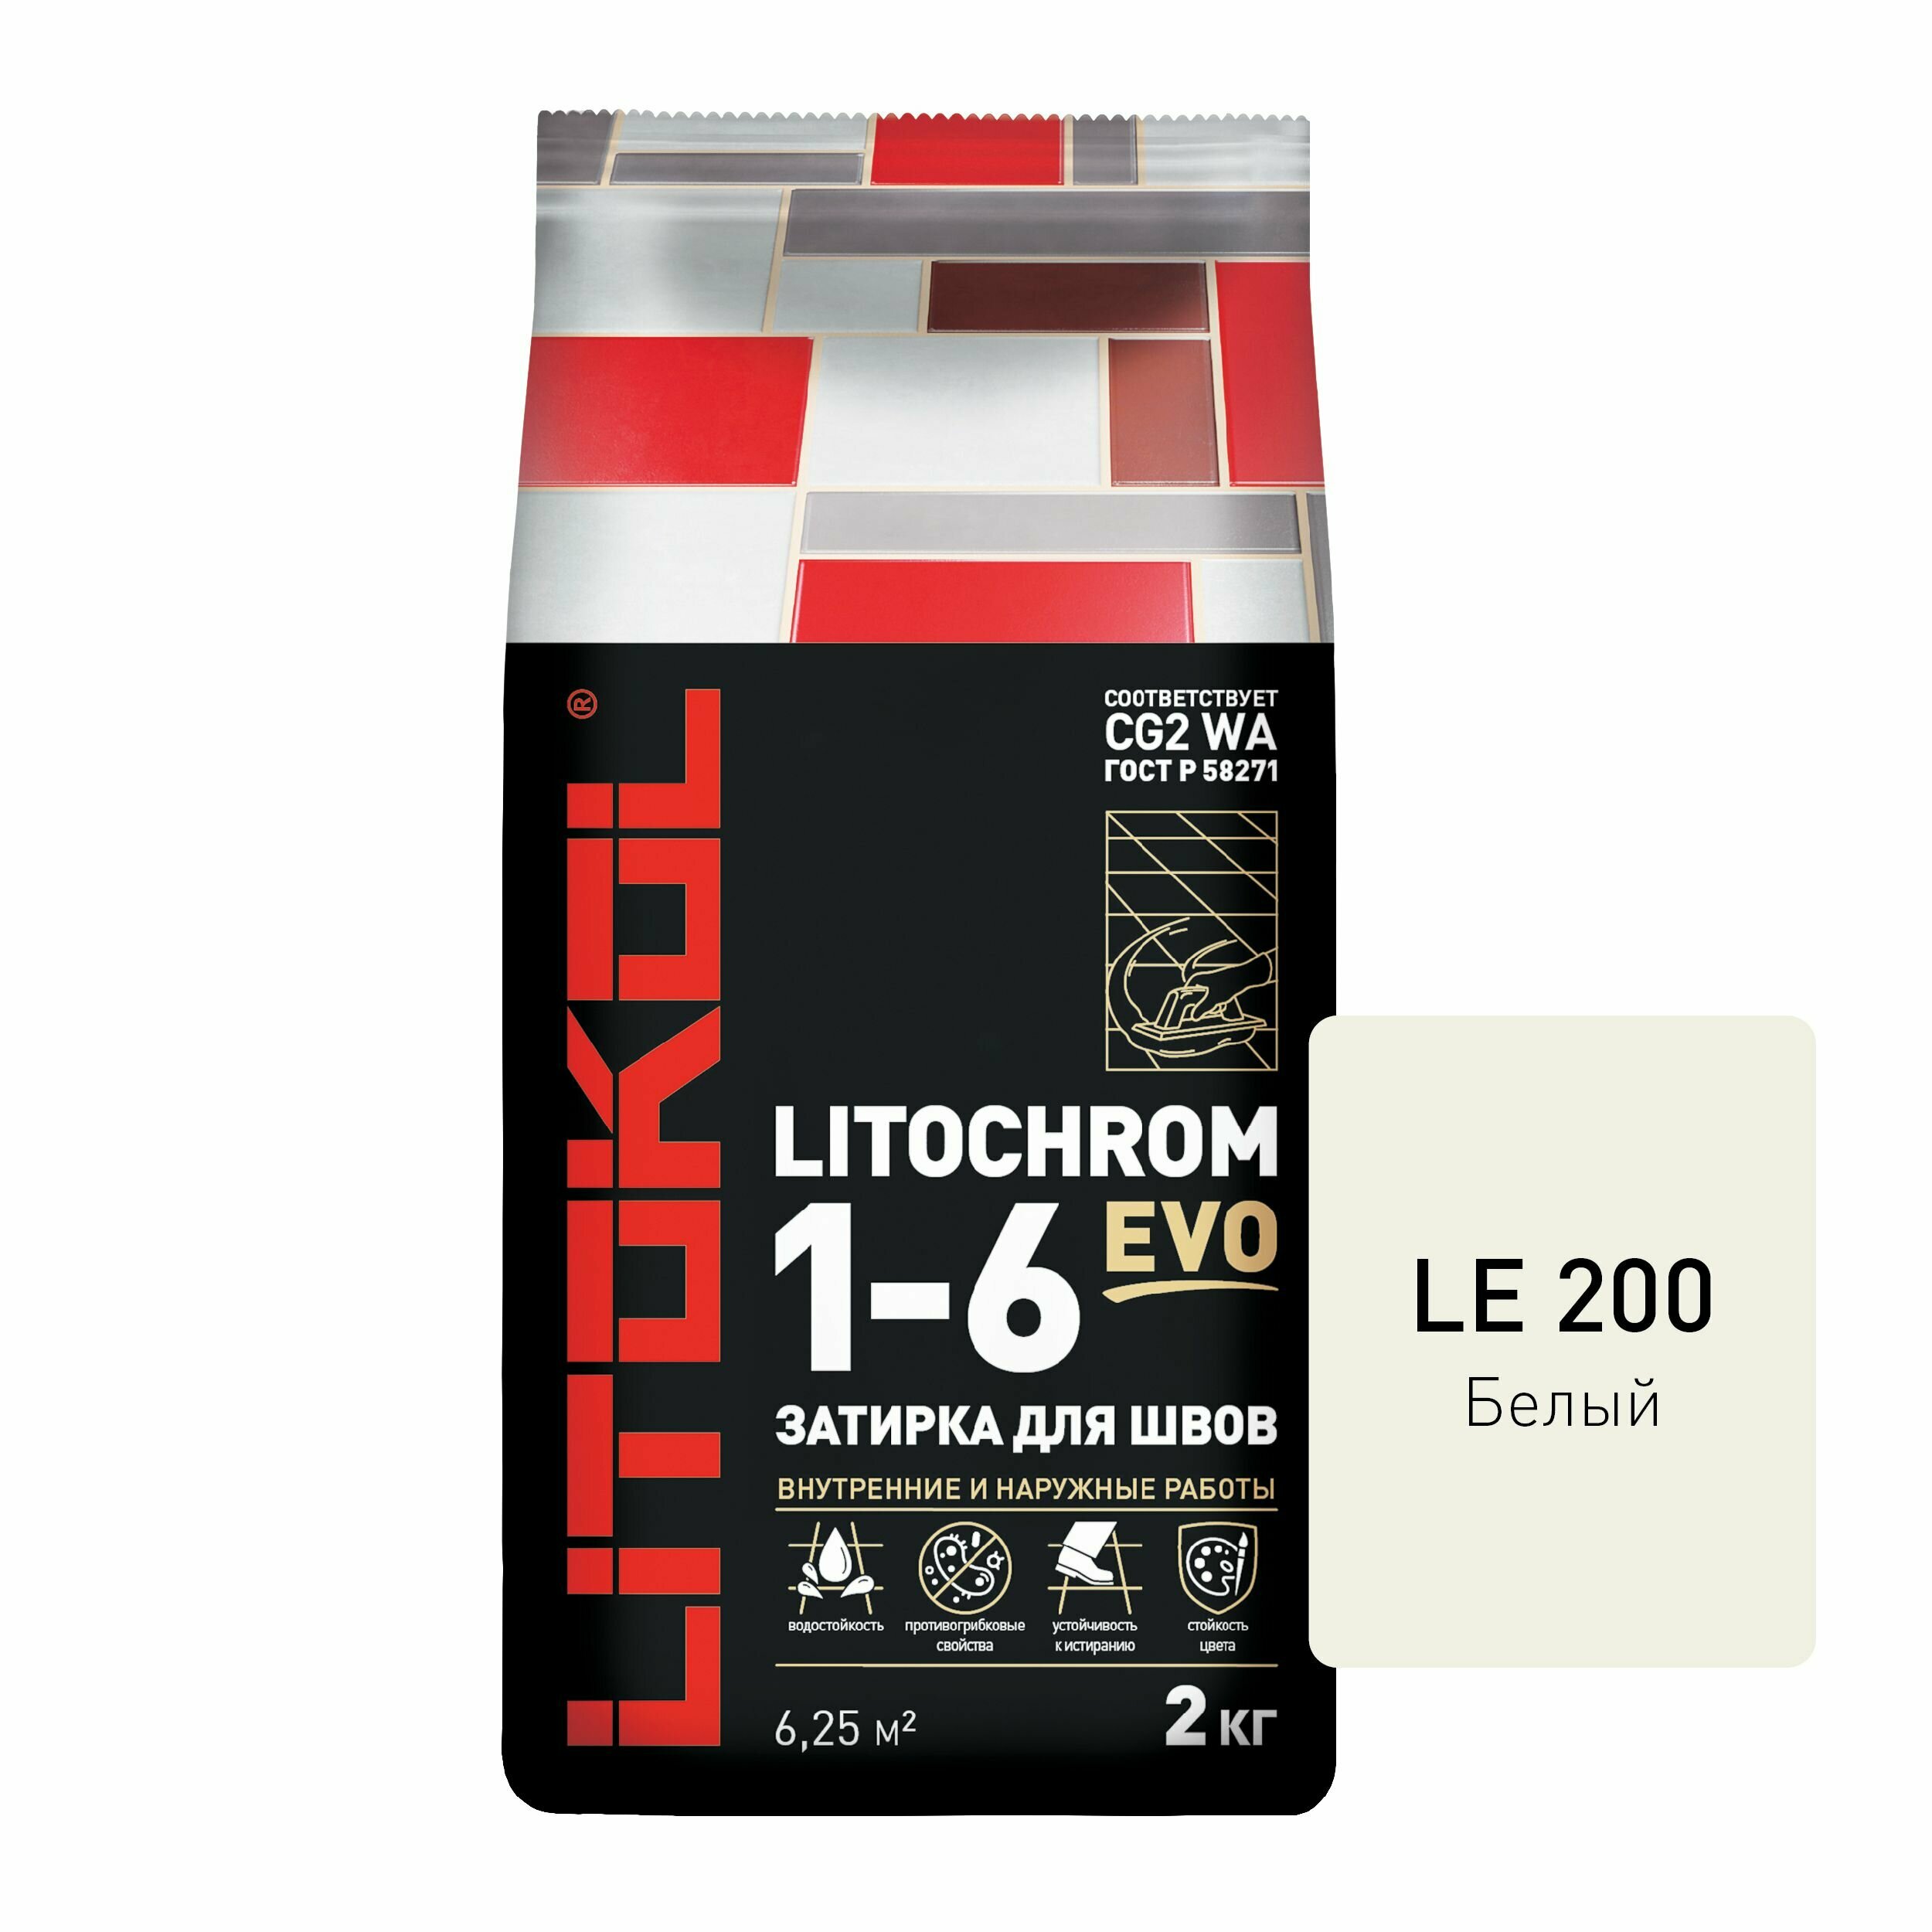 Затирка LITOKOL Litochrom 1-6 EVO 200 Белый 2 кг - 3 шт.